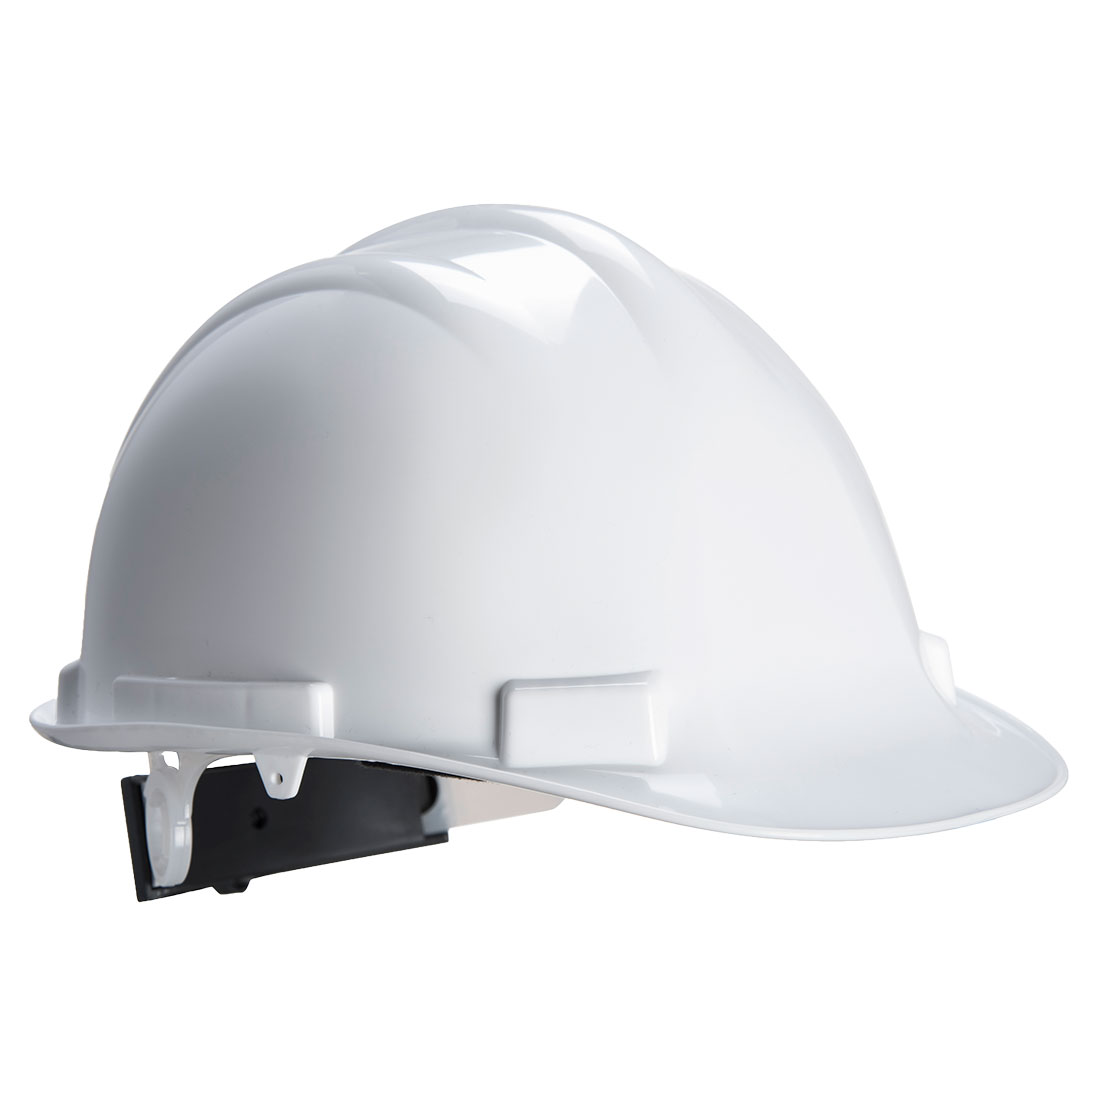 Expertbase Wheel Safety Helmet - White